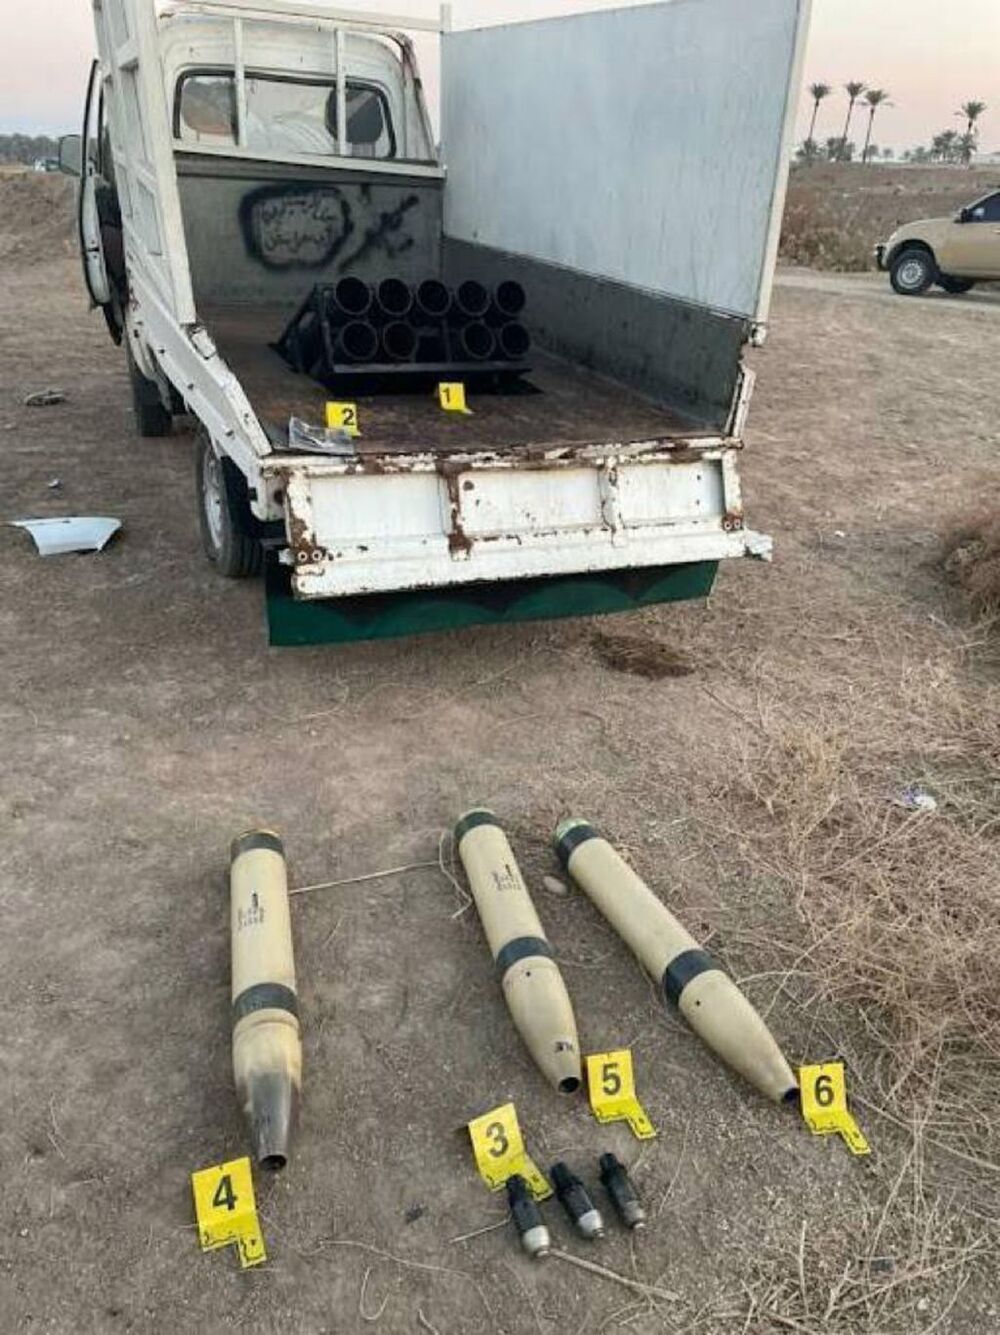 Las autoridades lograron confiscar un lanzador de cohetes y varios proyectiles